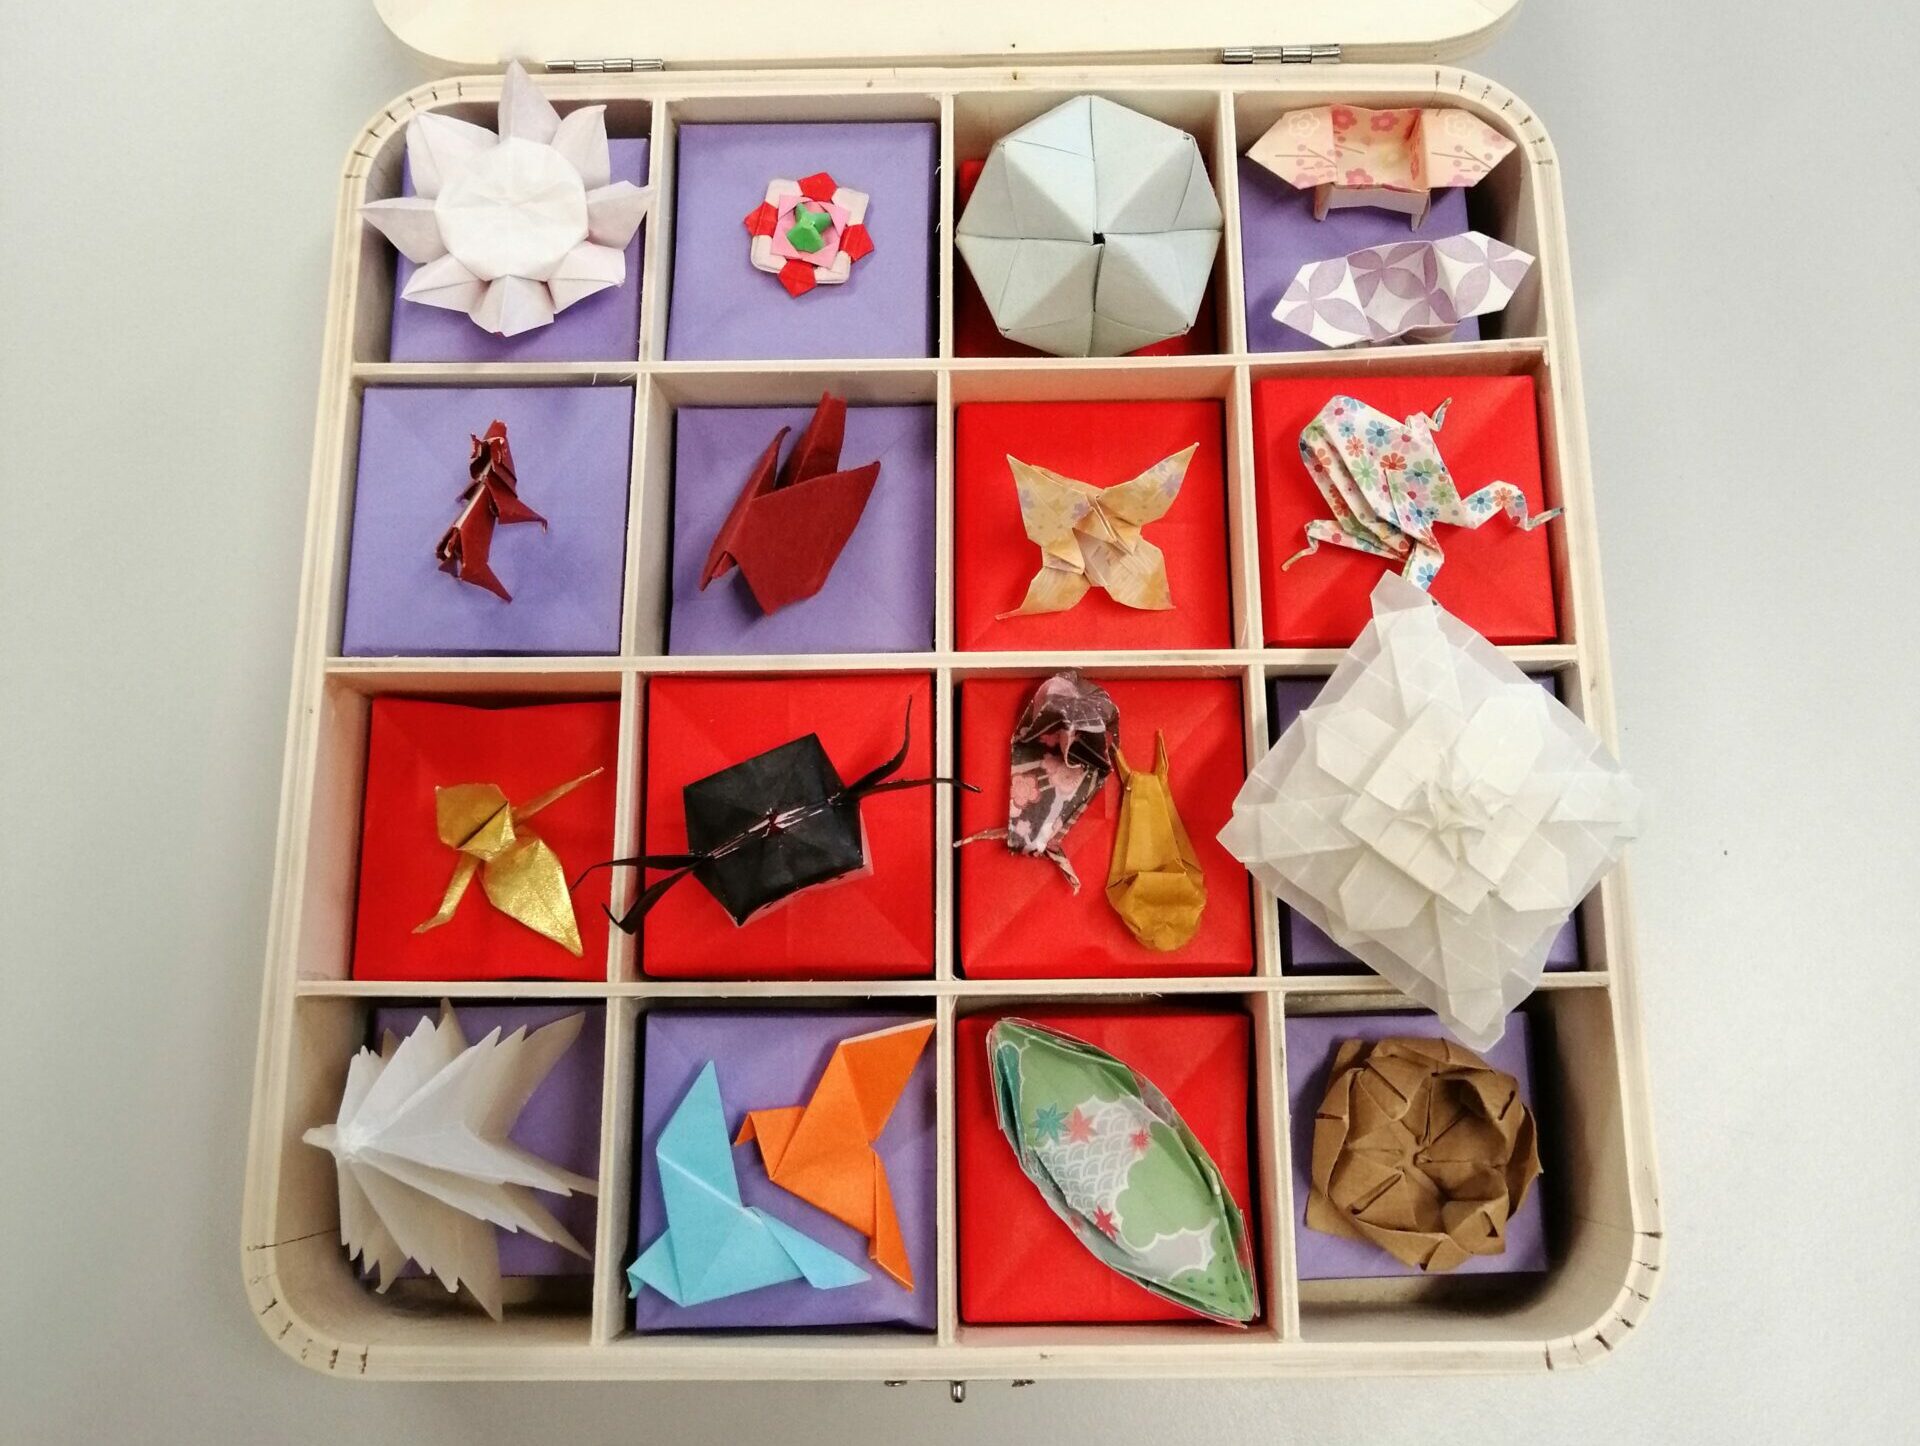 Ateliers Adultes – Atelier origami